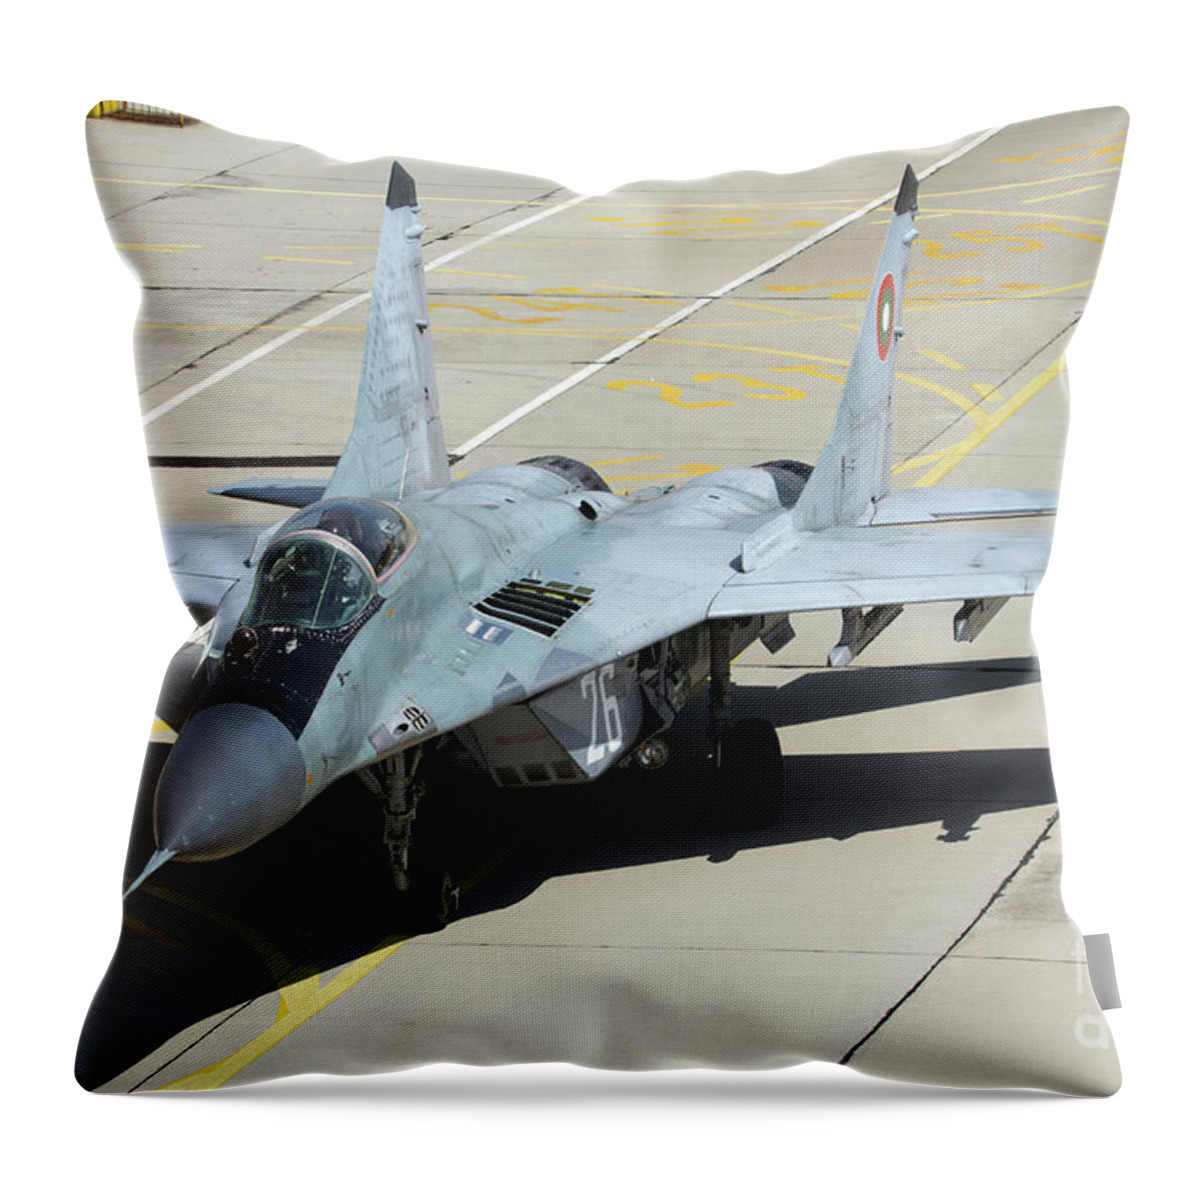 Bulgaria Throw Pillow featuring the photograph A Bulgarian Air Force Mig-29 Aircraft #2 by Anton Balakchiev